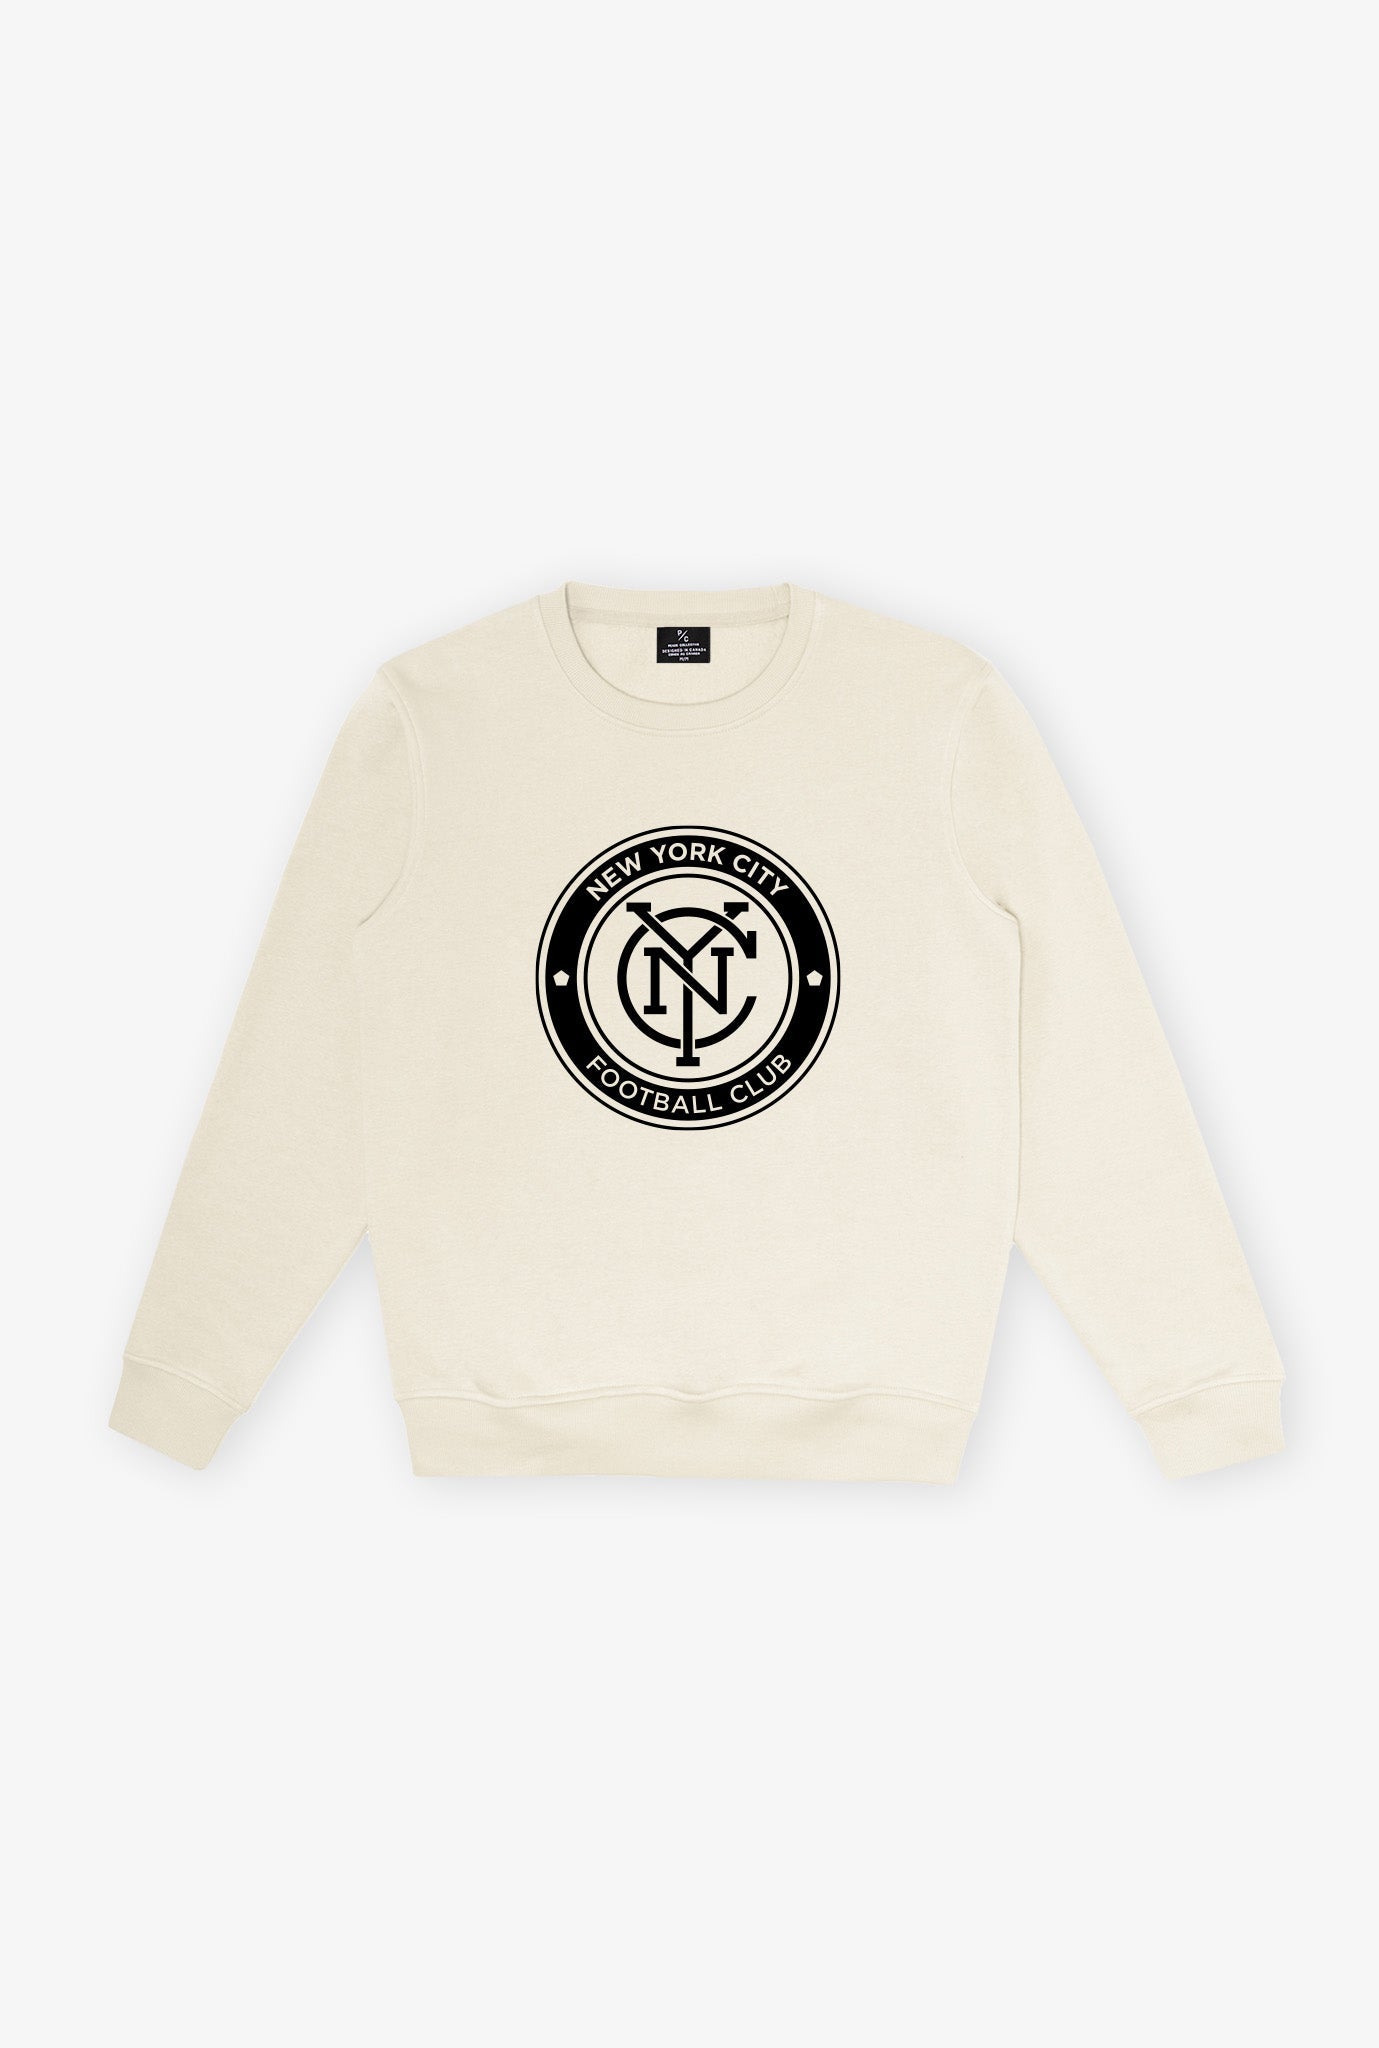 New York City FC Logo Crewneck - Ivory